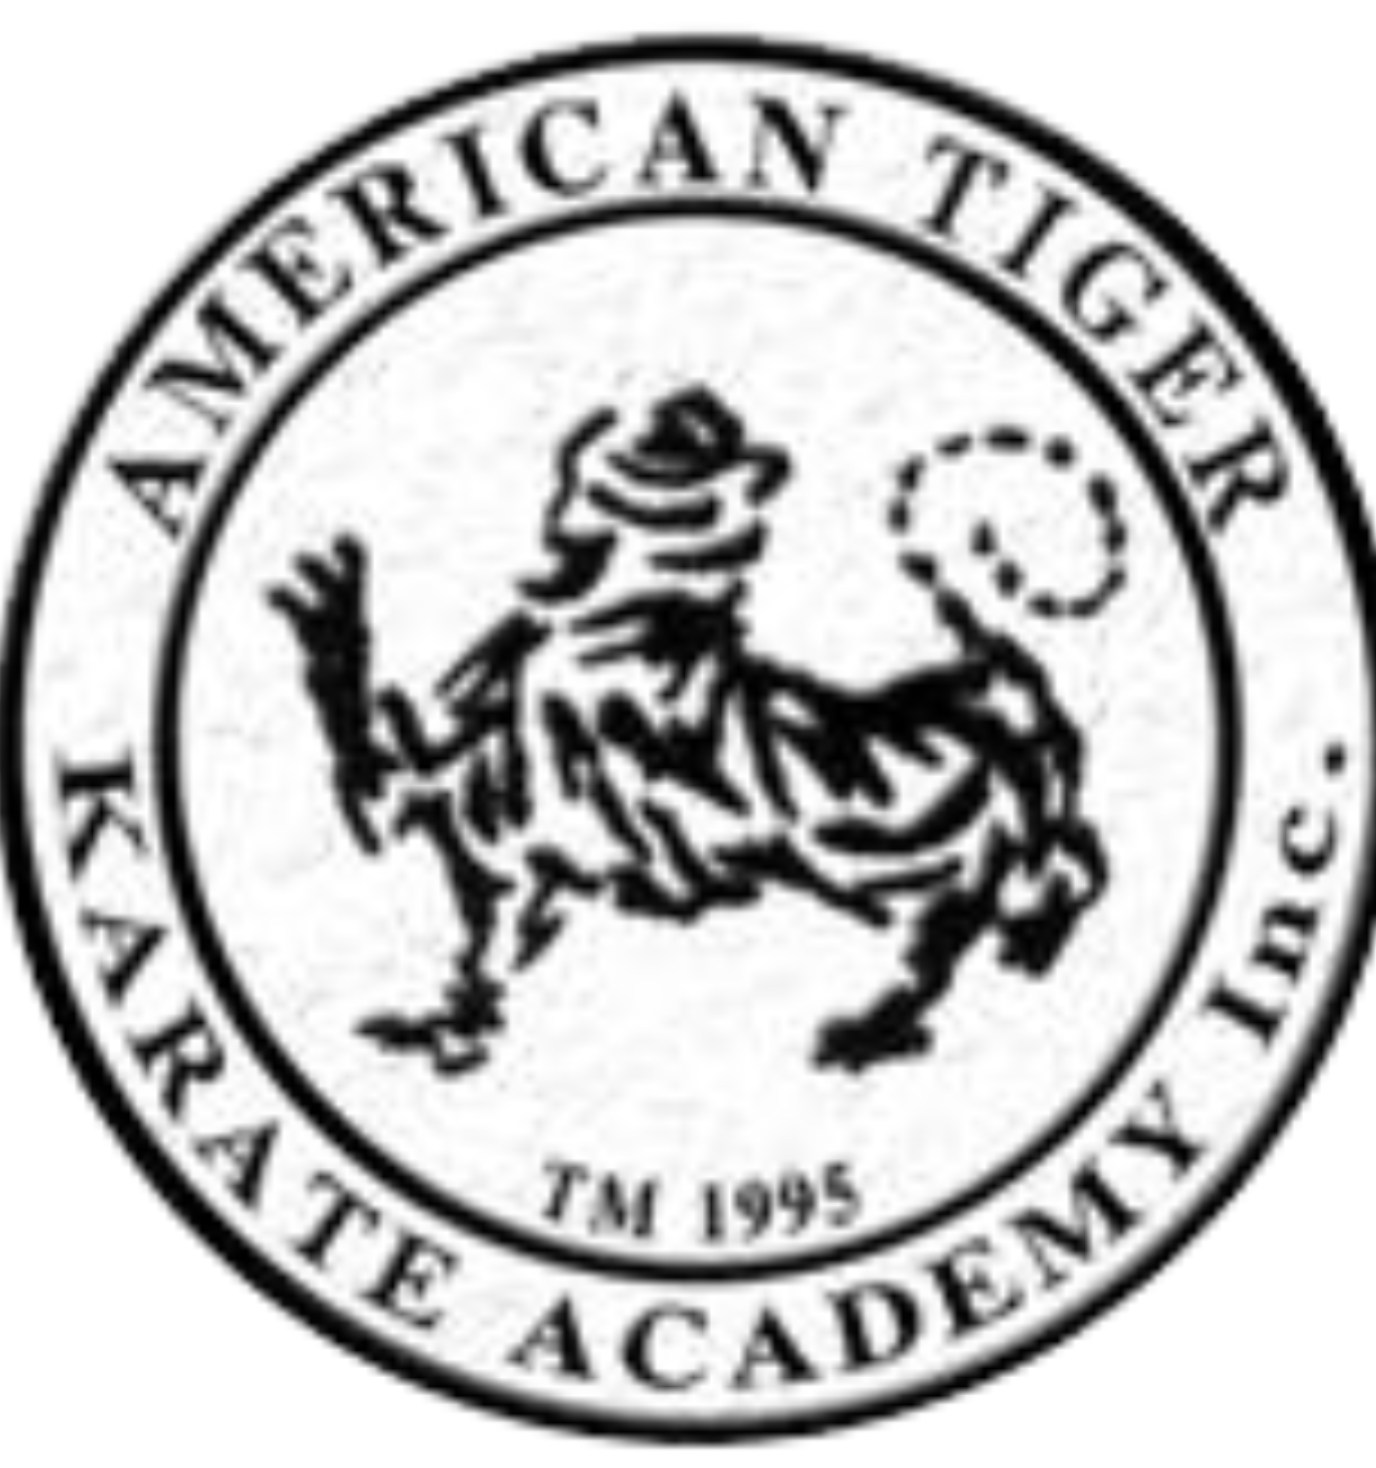 American Tiger Karate Academy